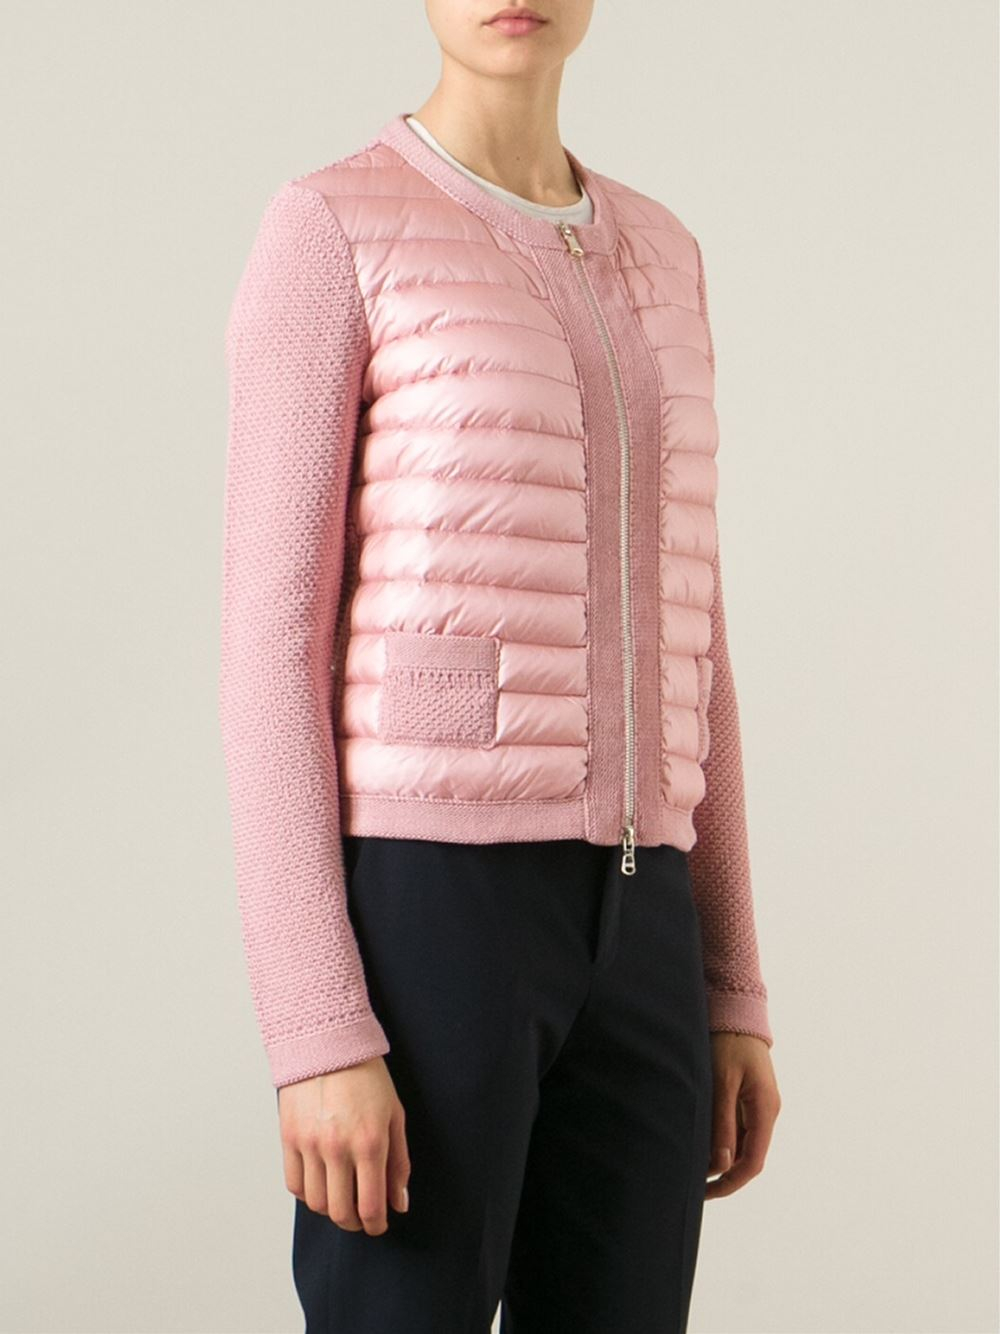 moncler pink sweater